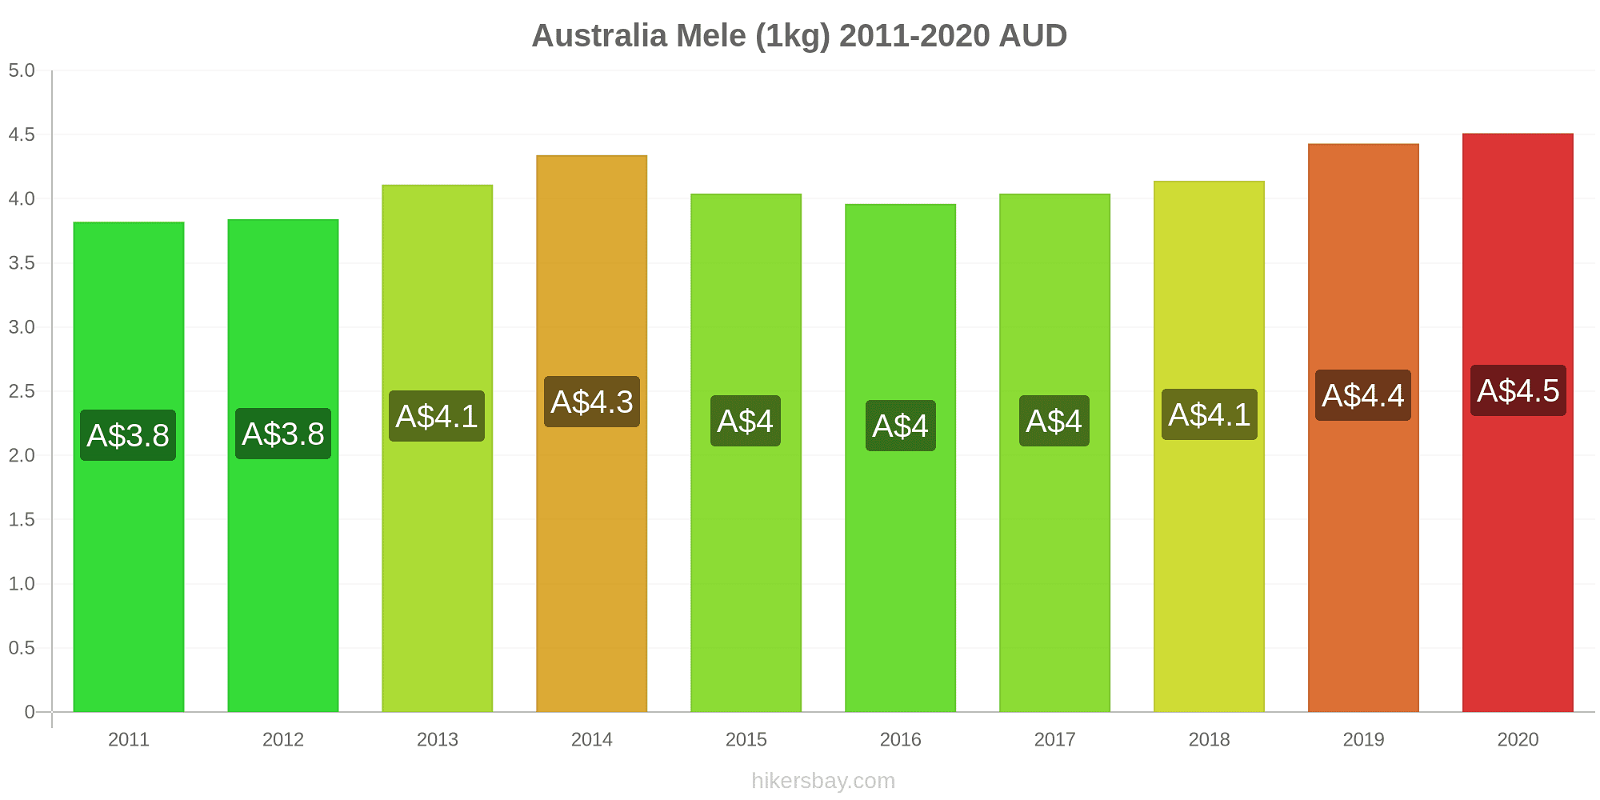 Australia variazioni di prezzo Mele (1kg) hikersbay.com